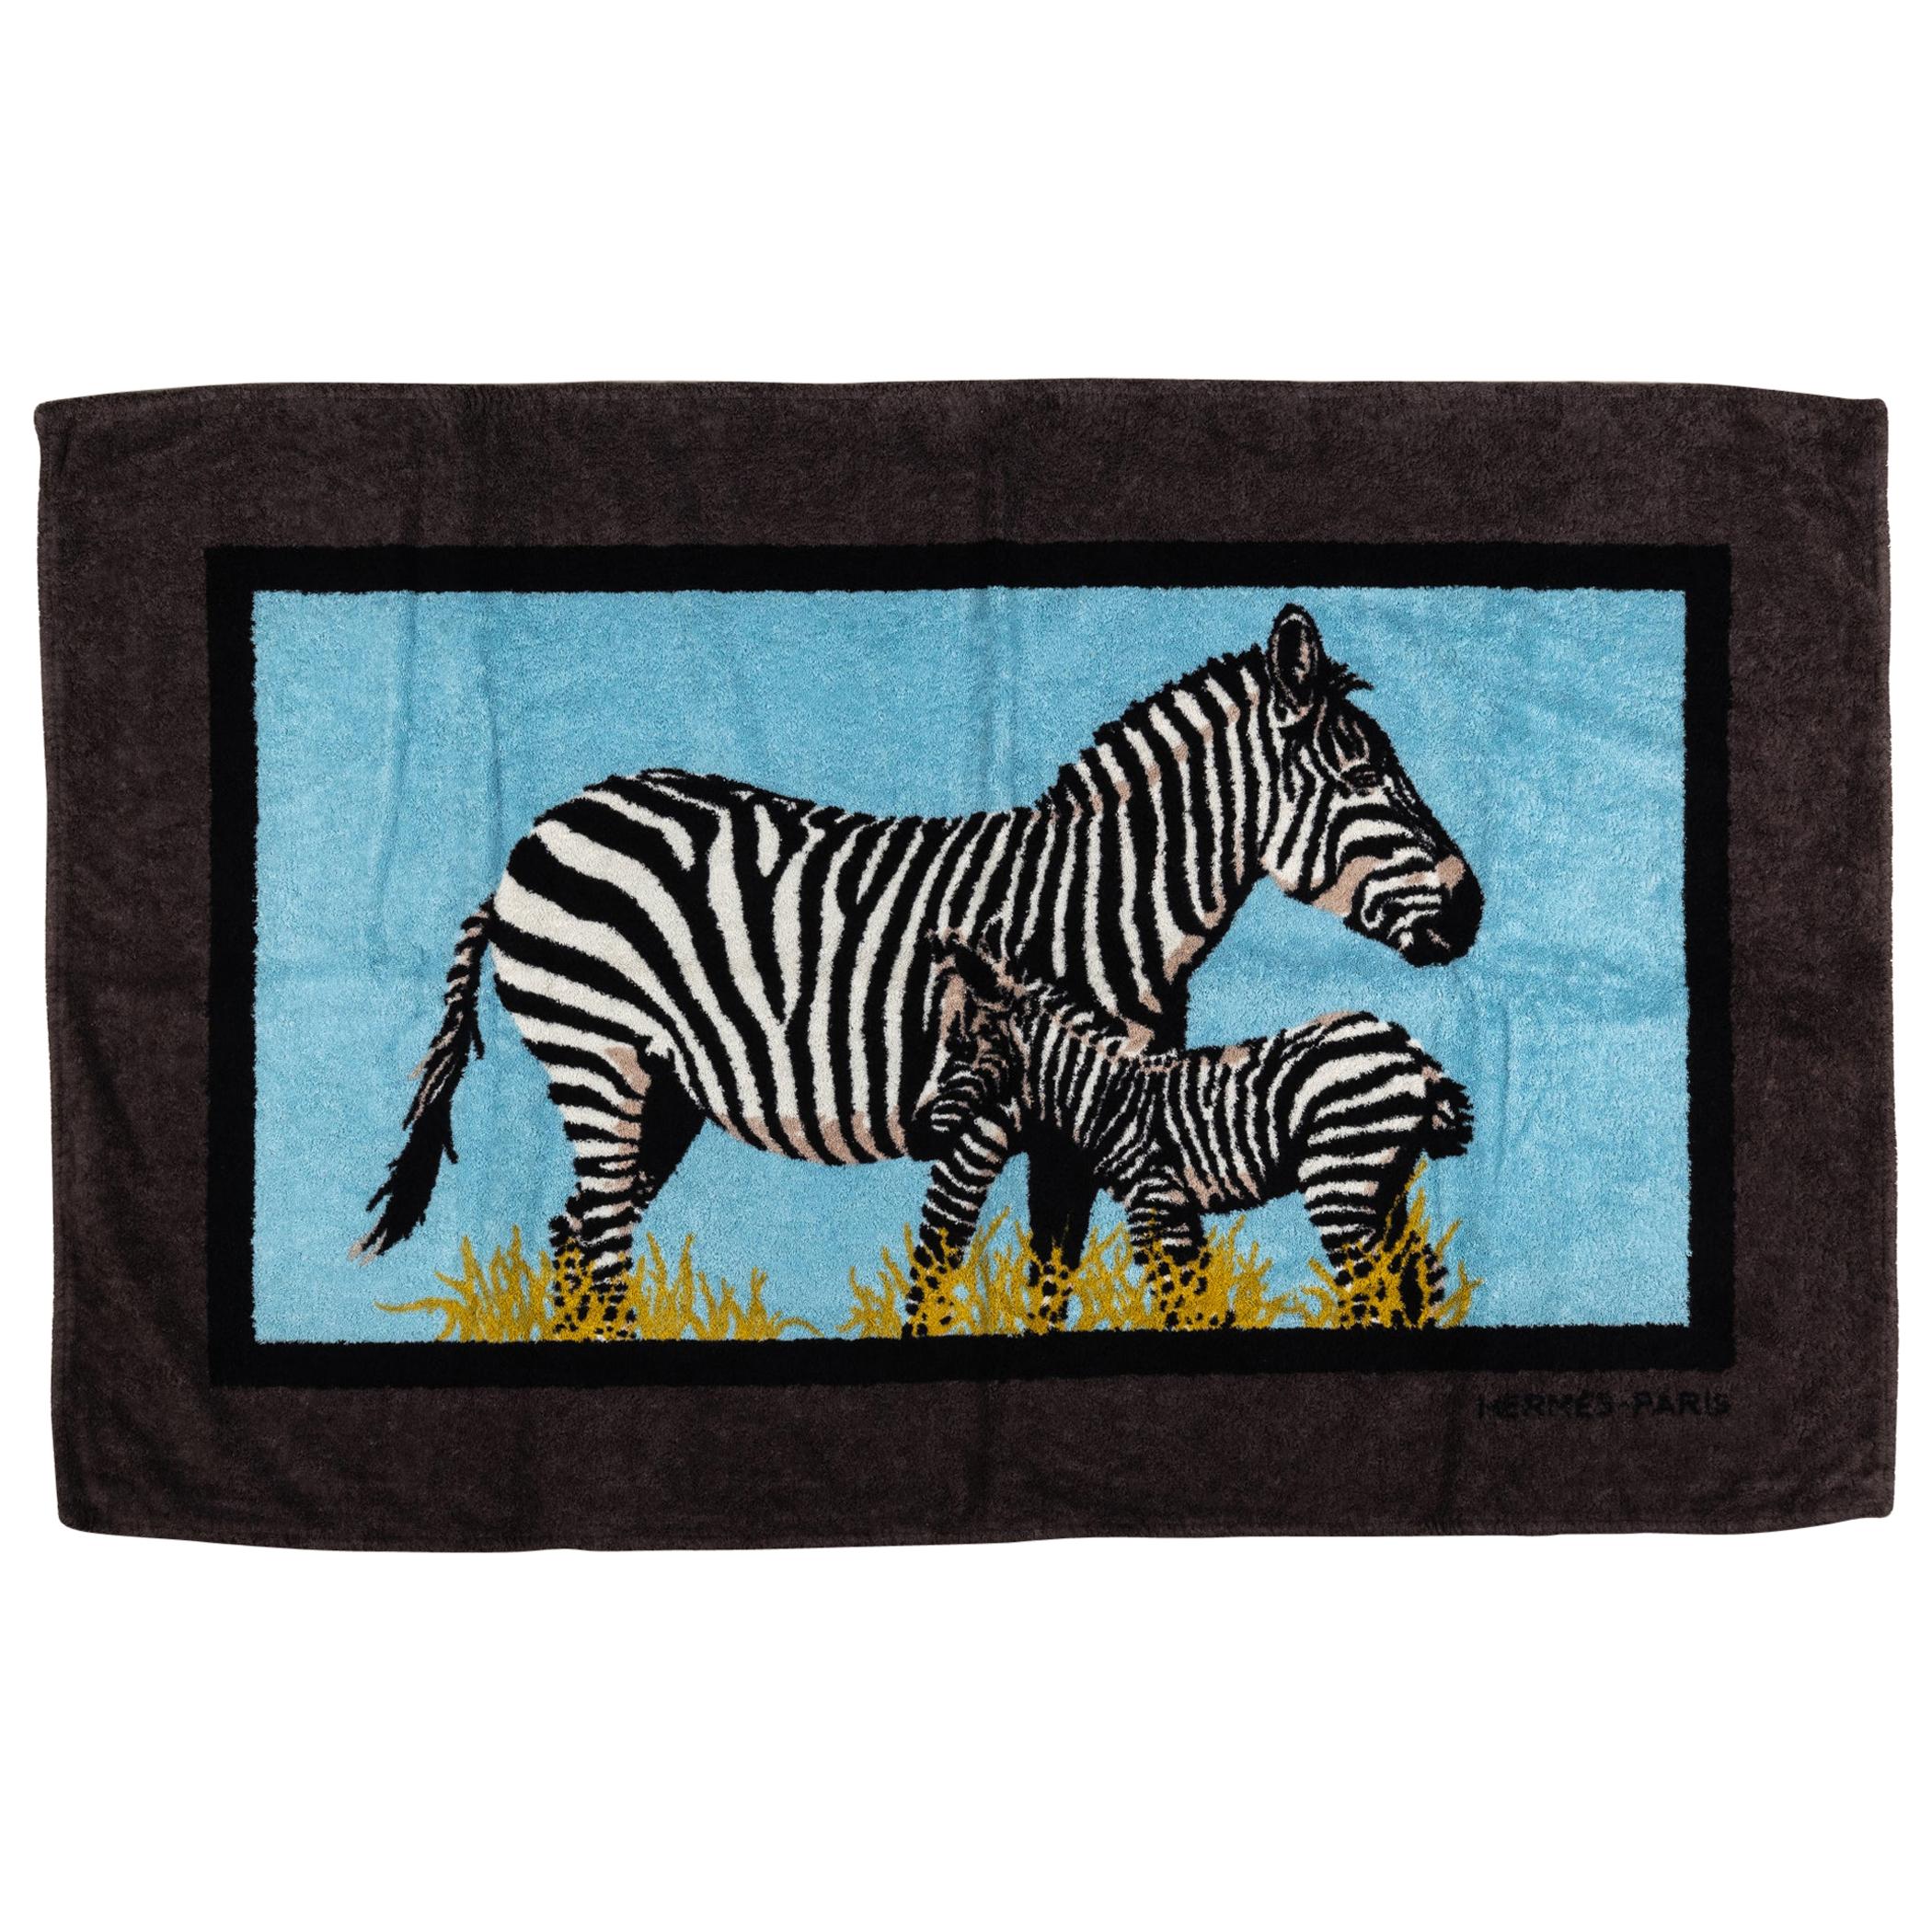 New Hermes Vintage Inspired Zebra Beach Towel